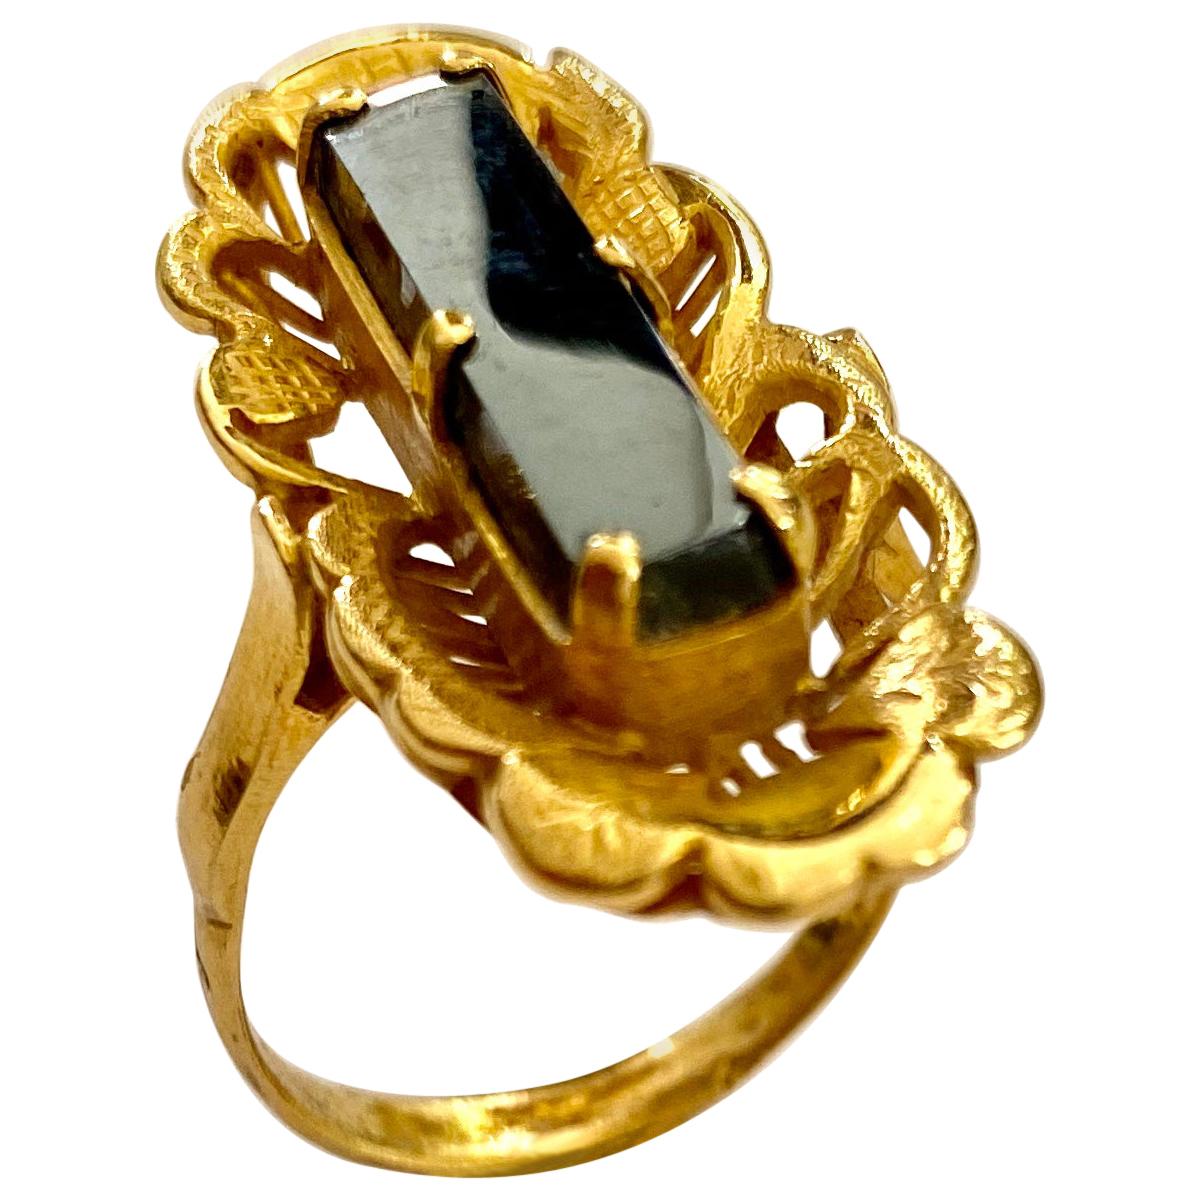 One '1' 20 Karat Yellow Gold Ring with One Hematite Stone, Indonesia, 1935